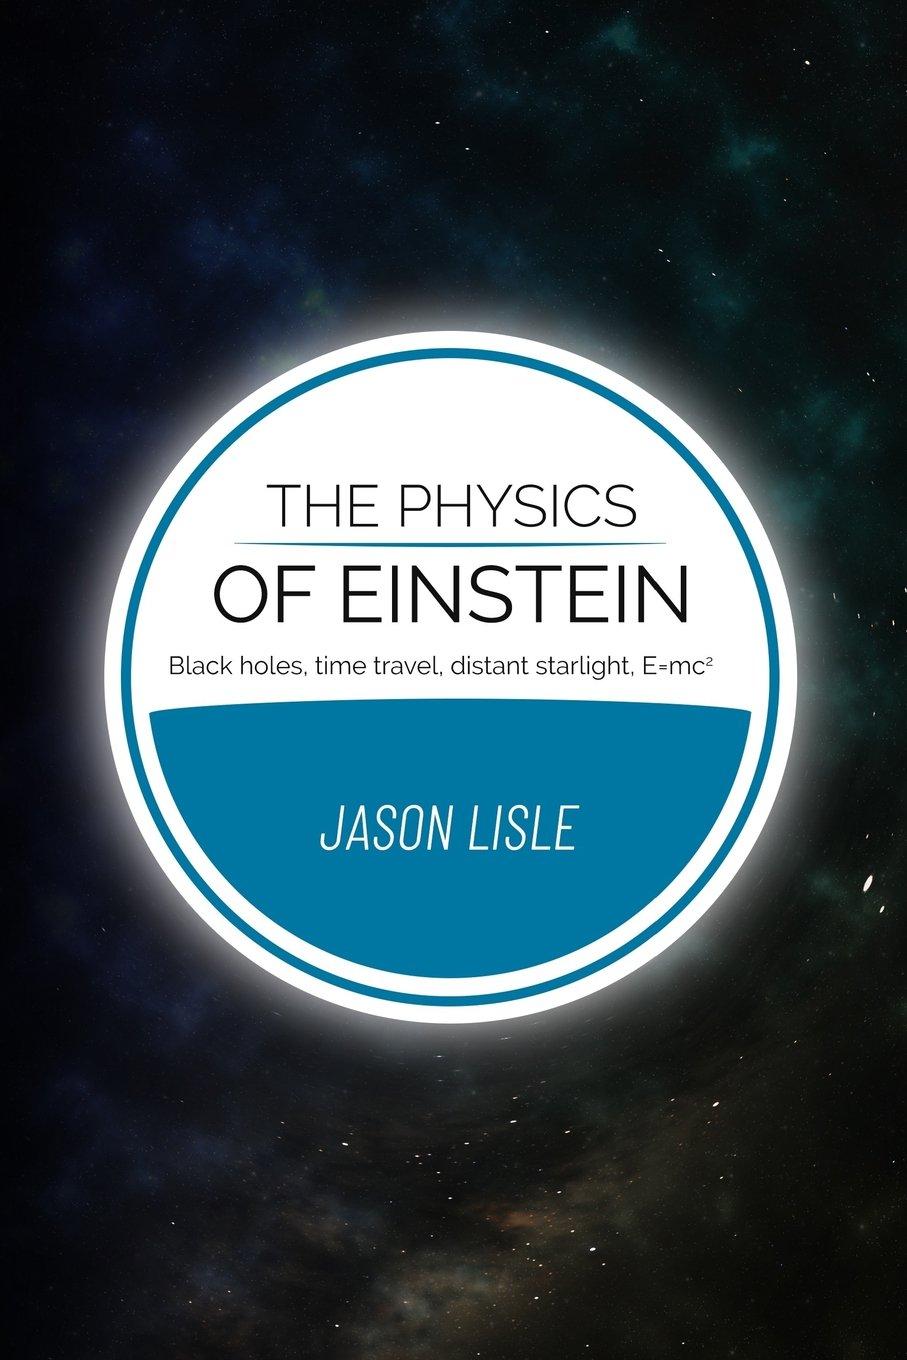 the physics of einstein black holes time travel distant starlight e=mc2 1st edition jason lisle 0999707906,